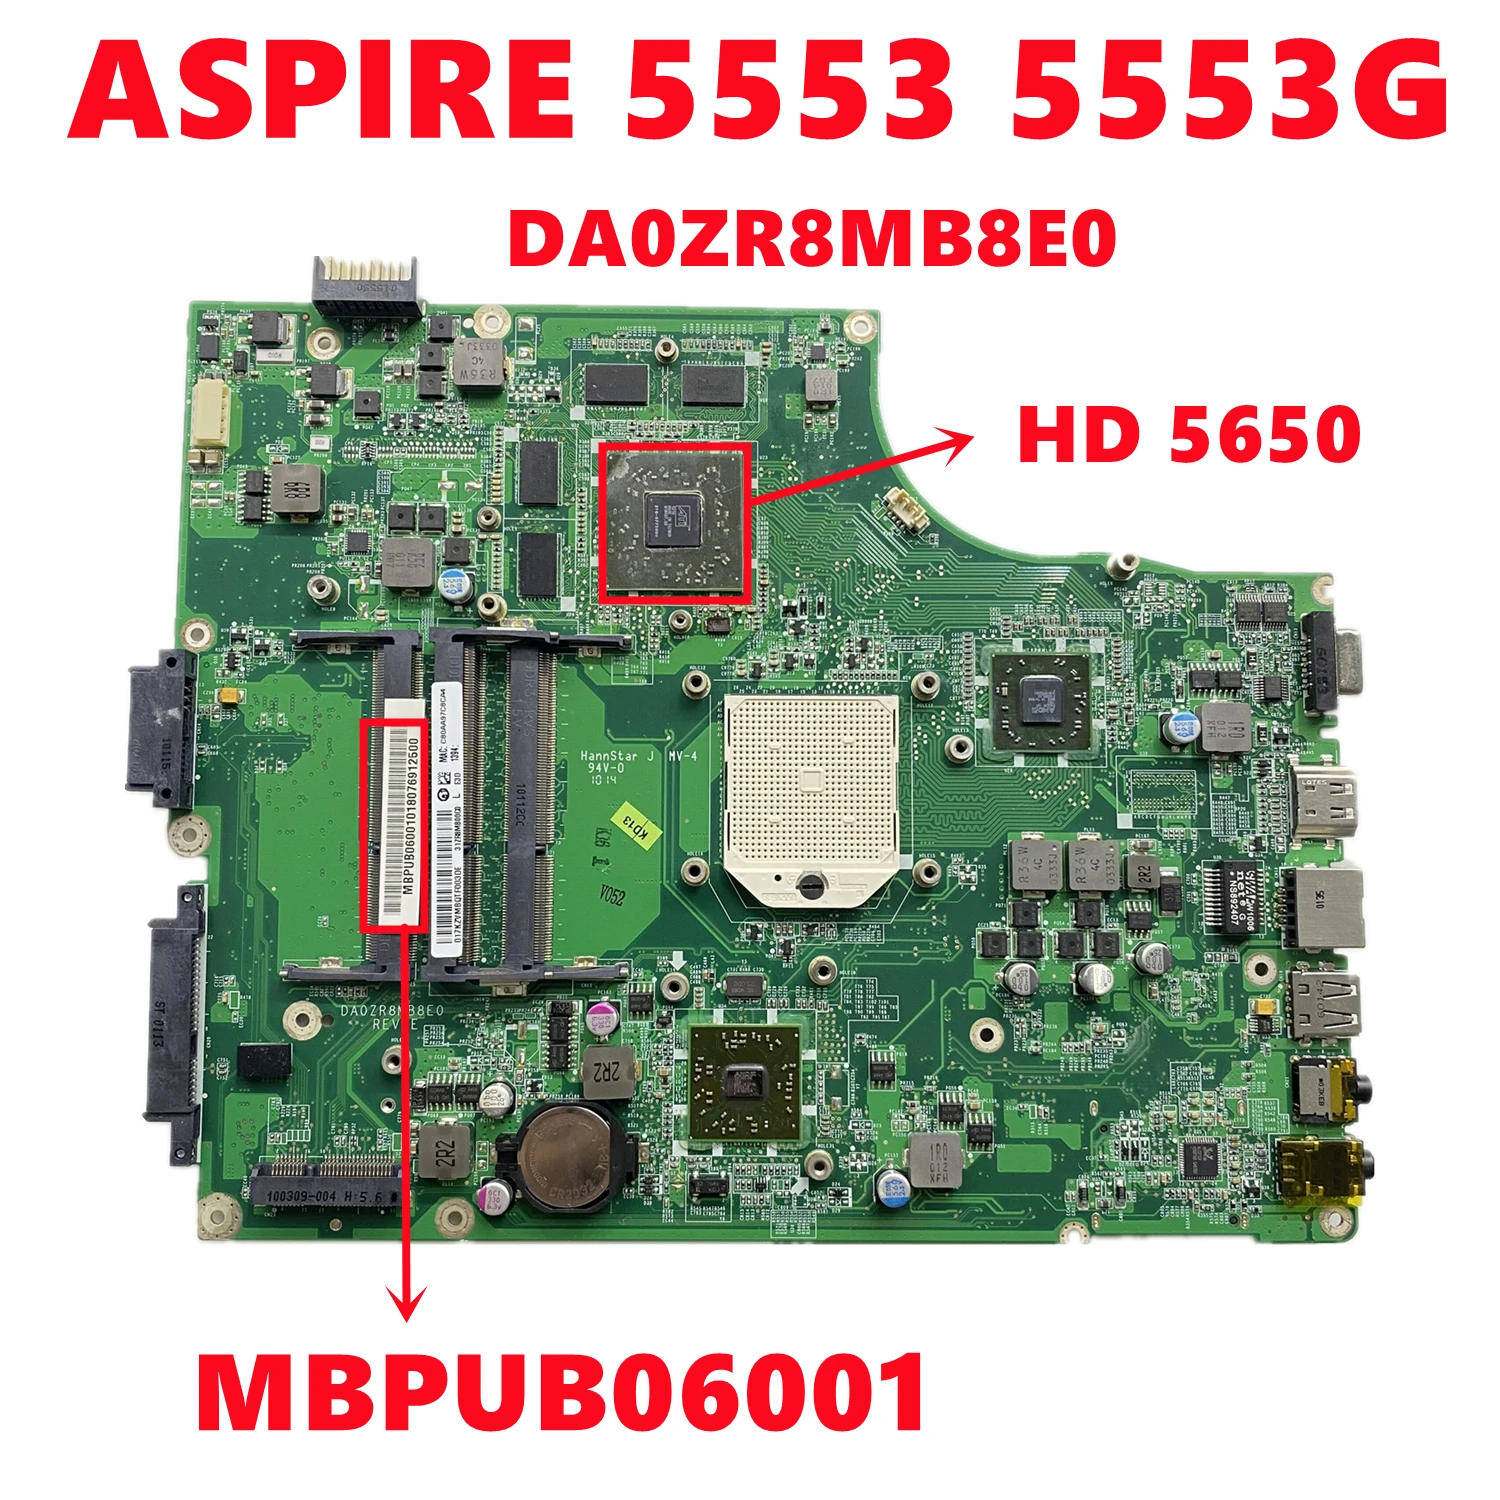 Aspire 5553g